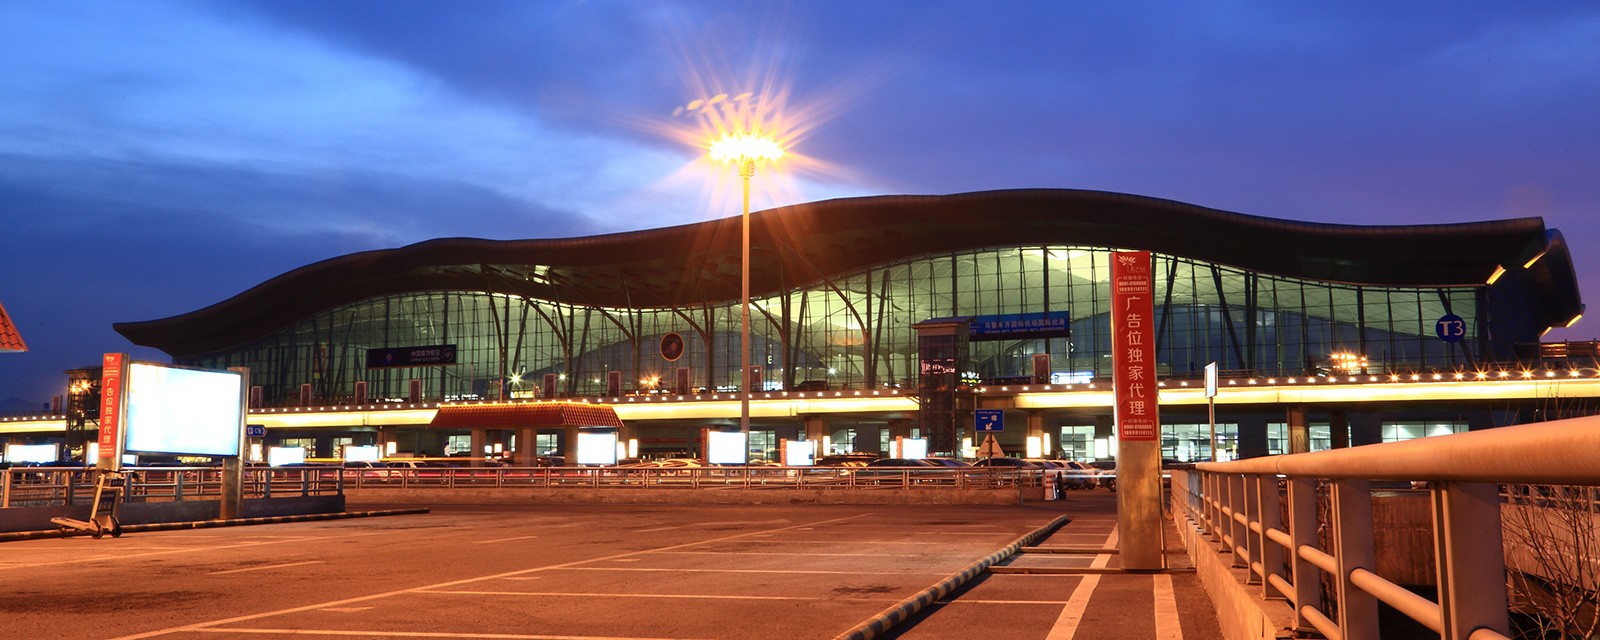 Urumqi International Airport parking lot lighting project